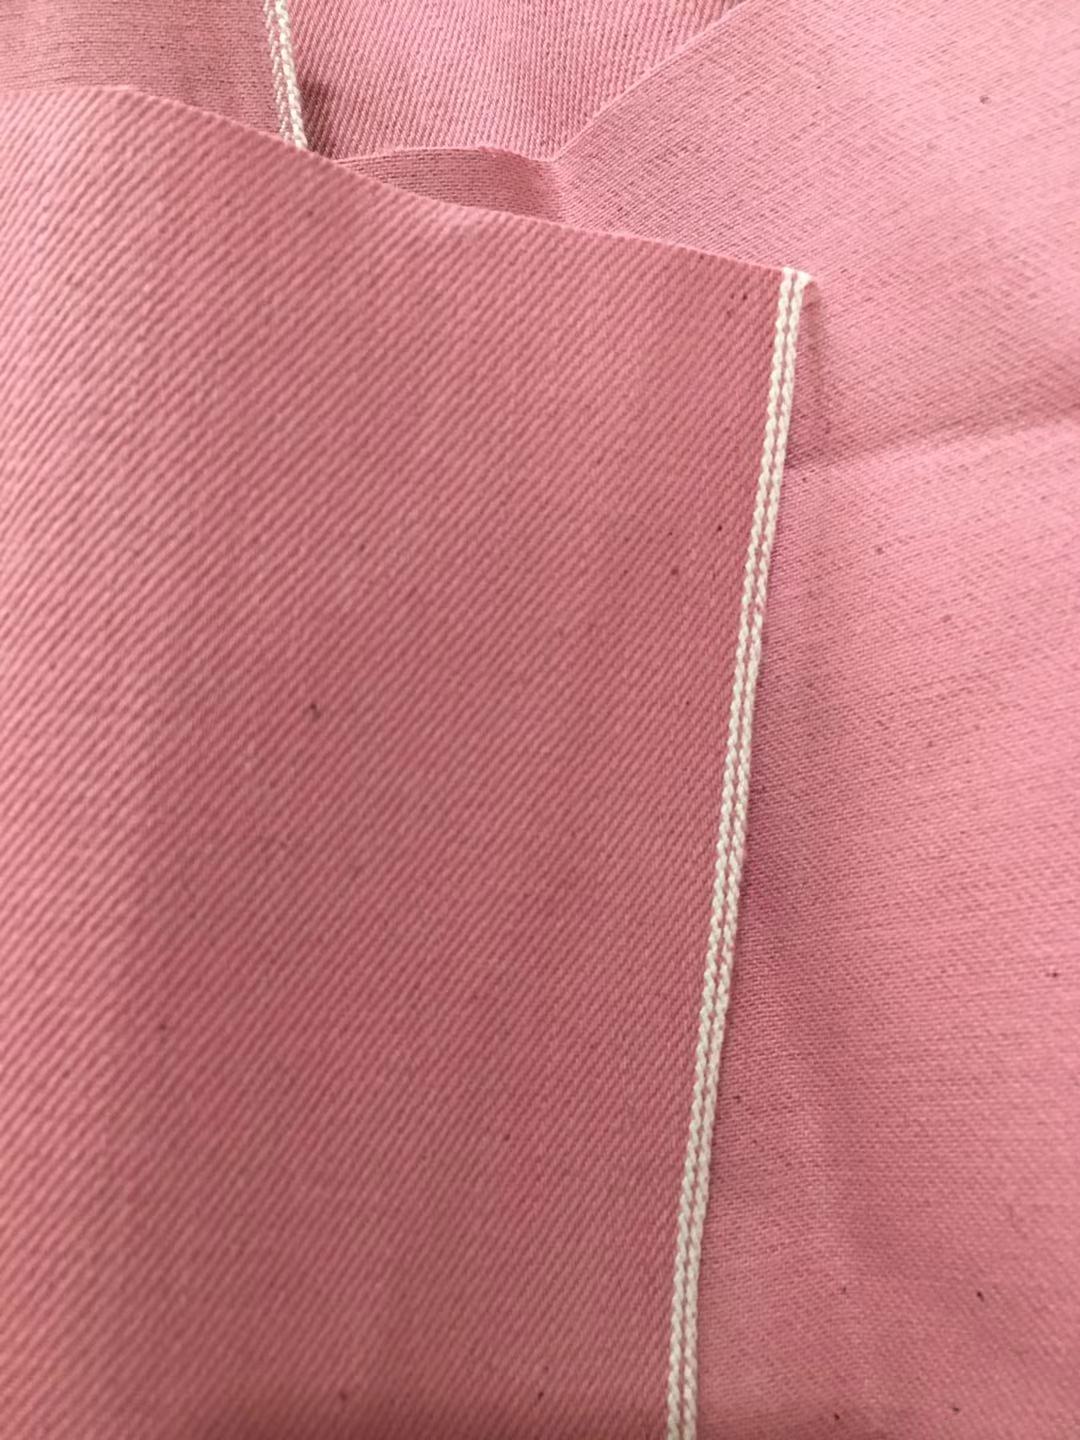 12.4oz Wholesale Pink Denim Fabric for Women's Selvedge Jeans